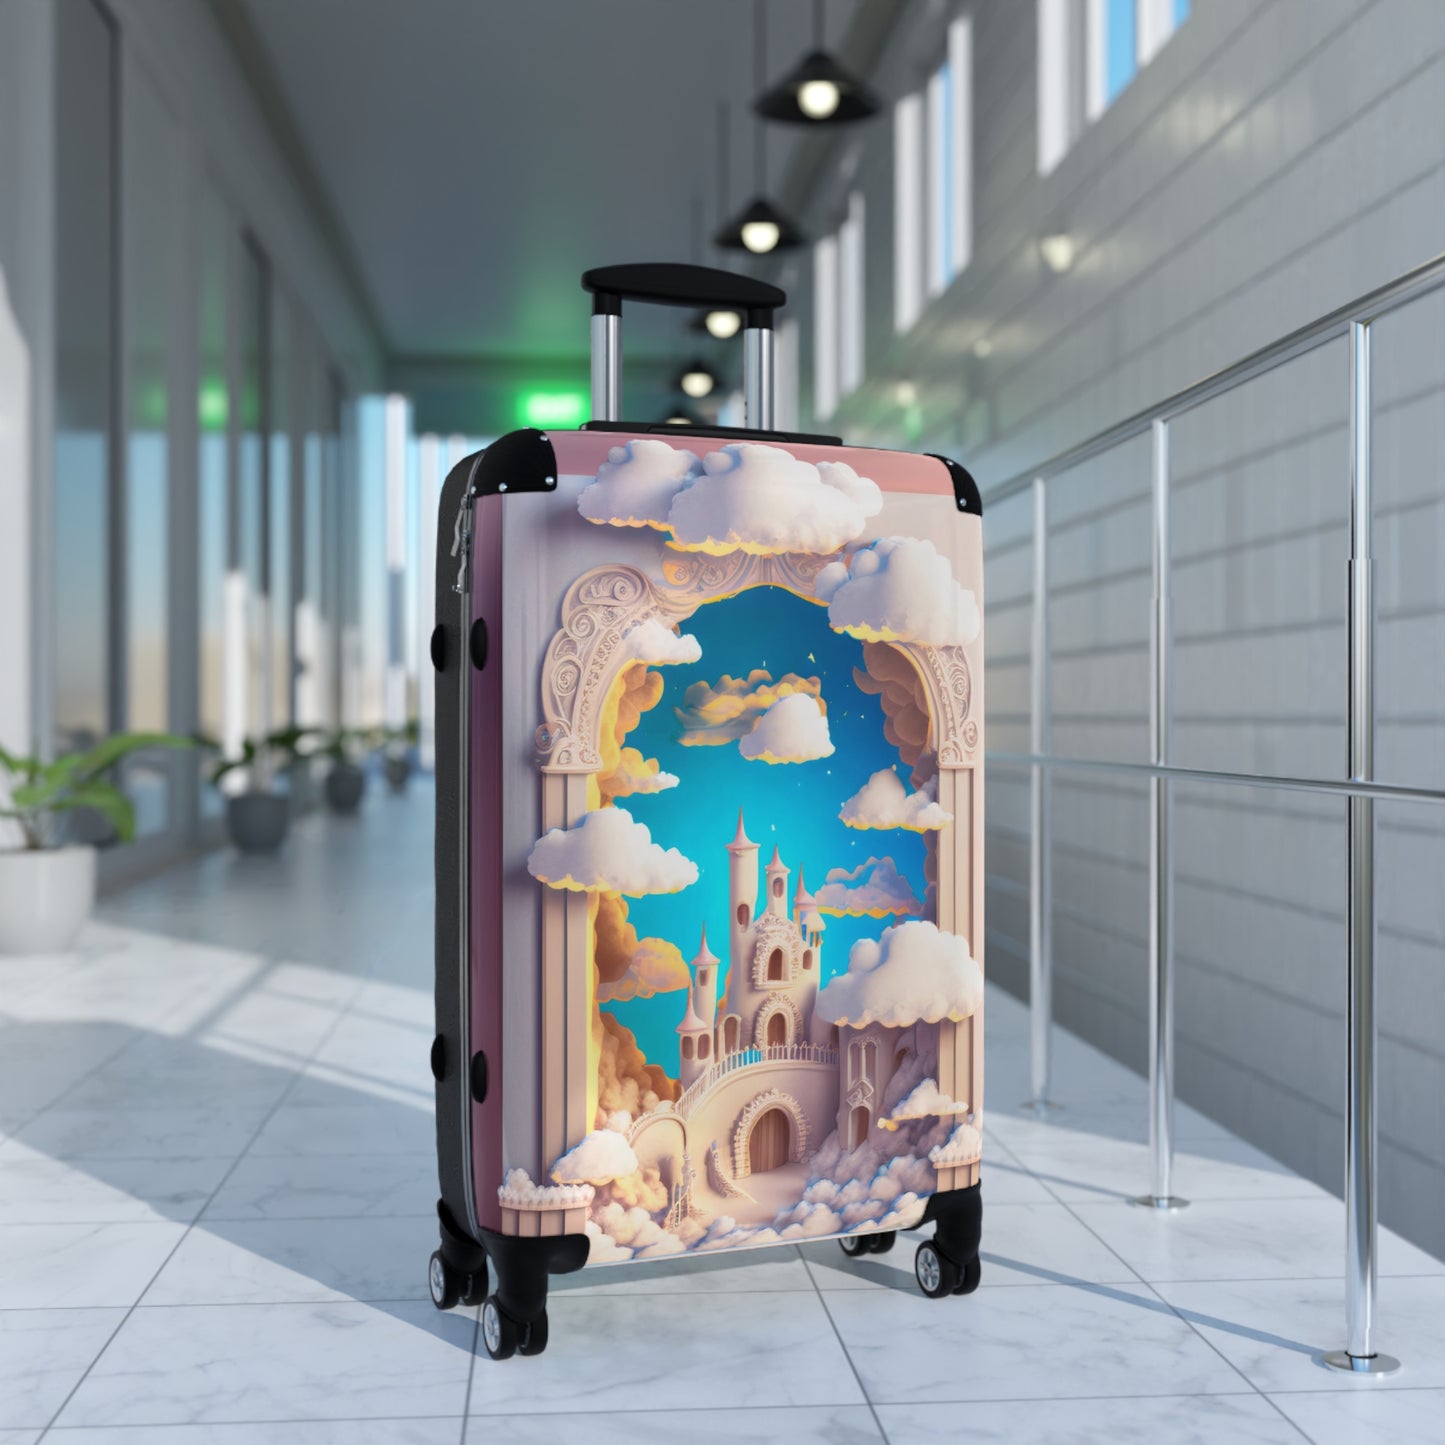 Magical 3D Disney Palace Suitcase Fantasy Travel Gear